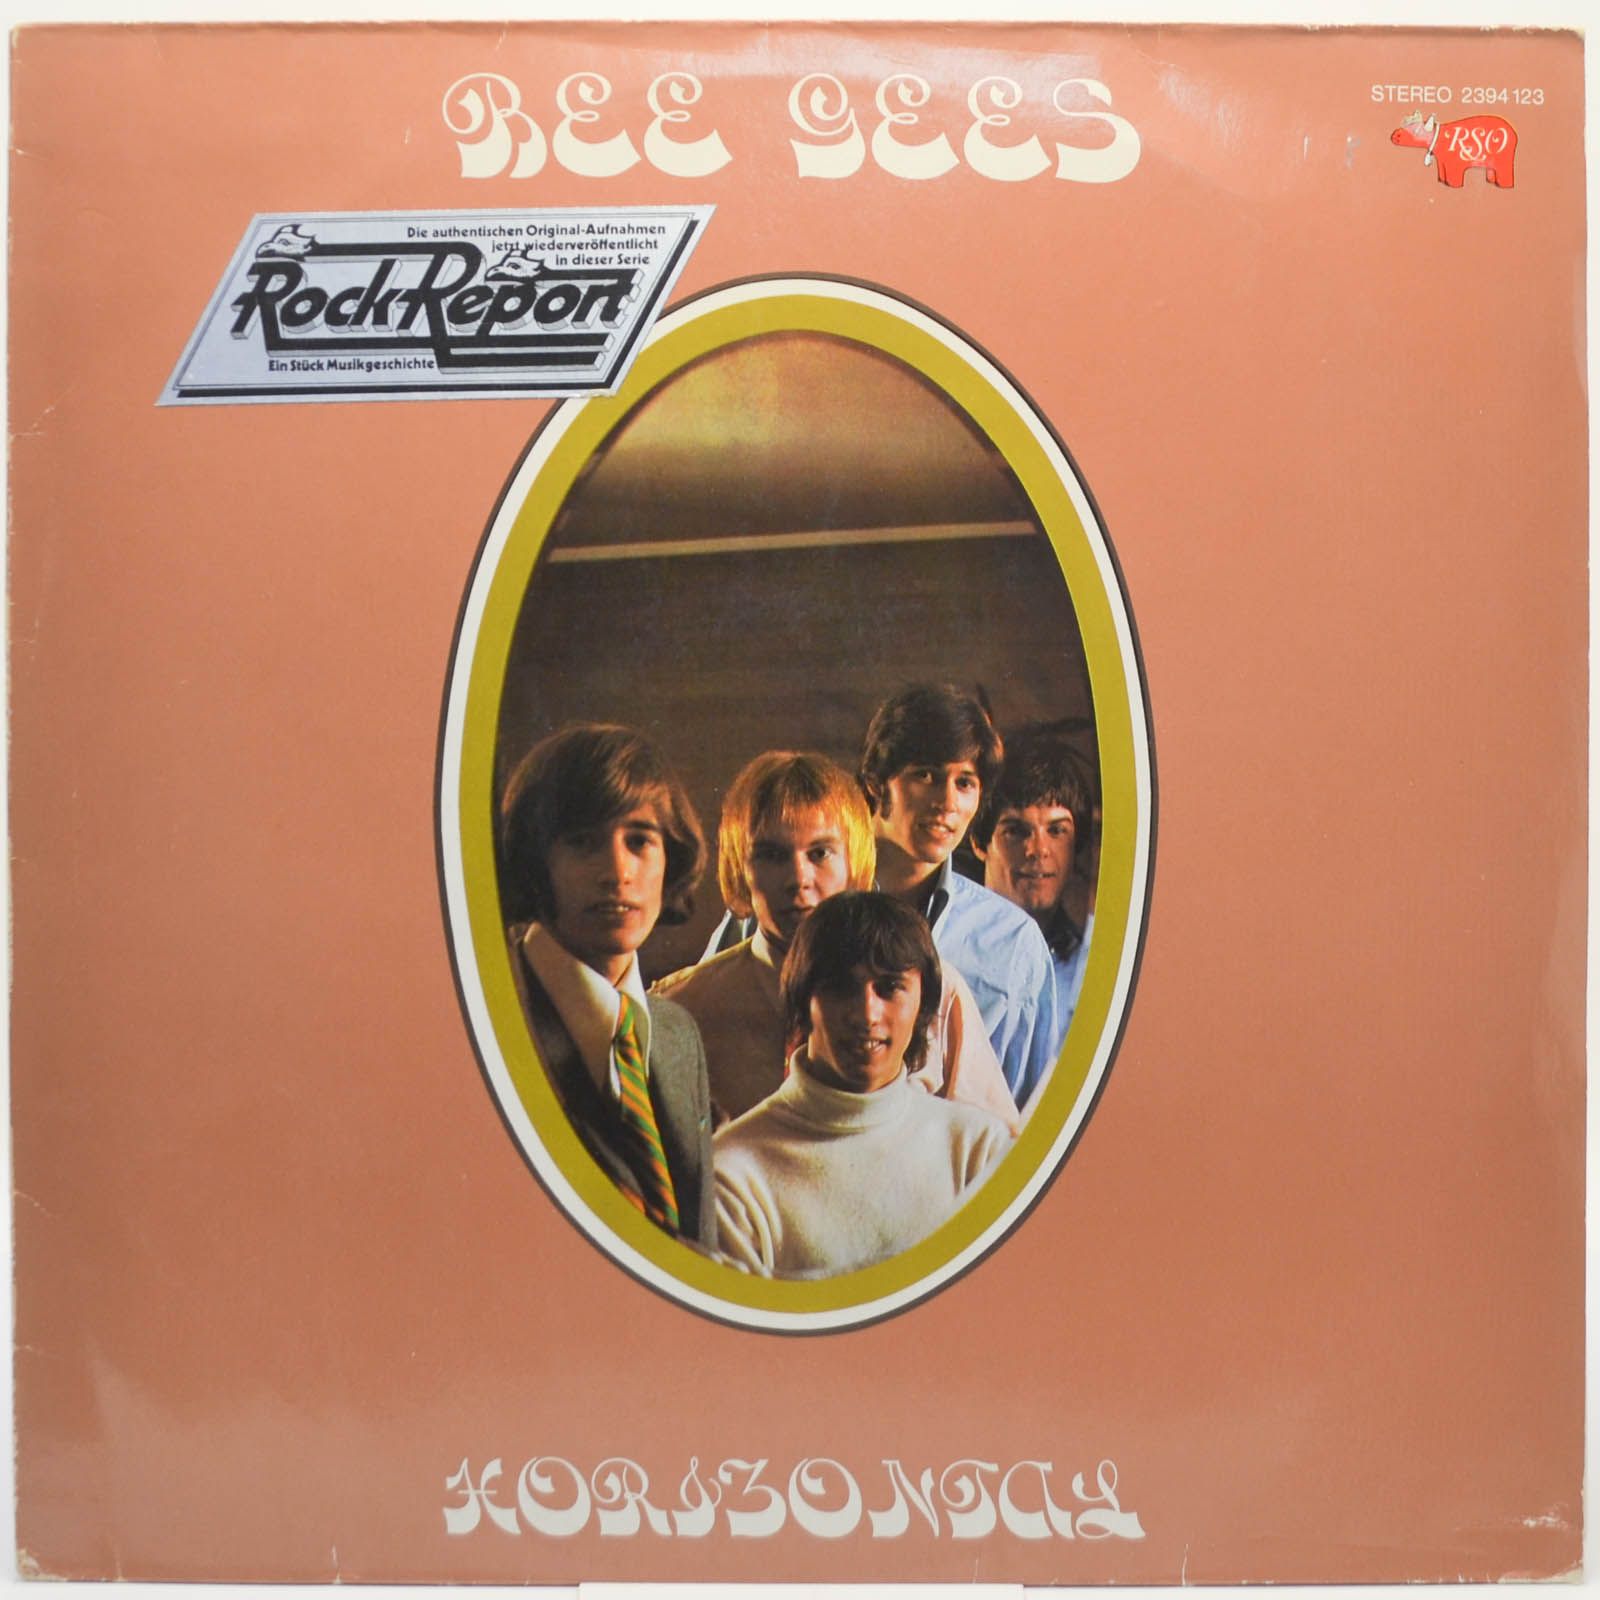 Bee Gees — Horizontal, 1968